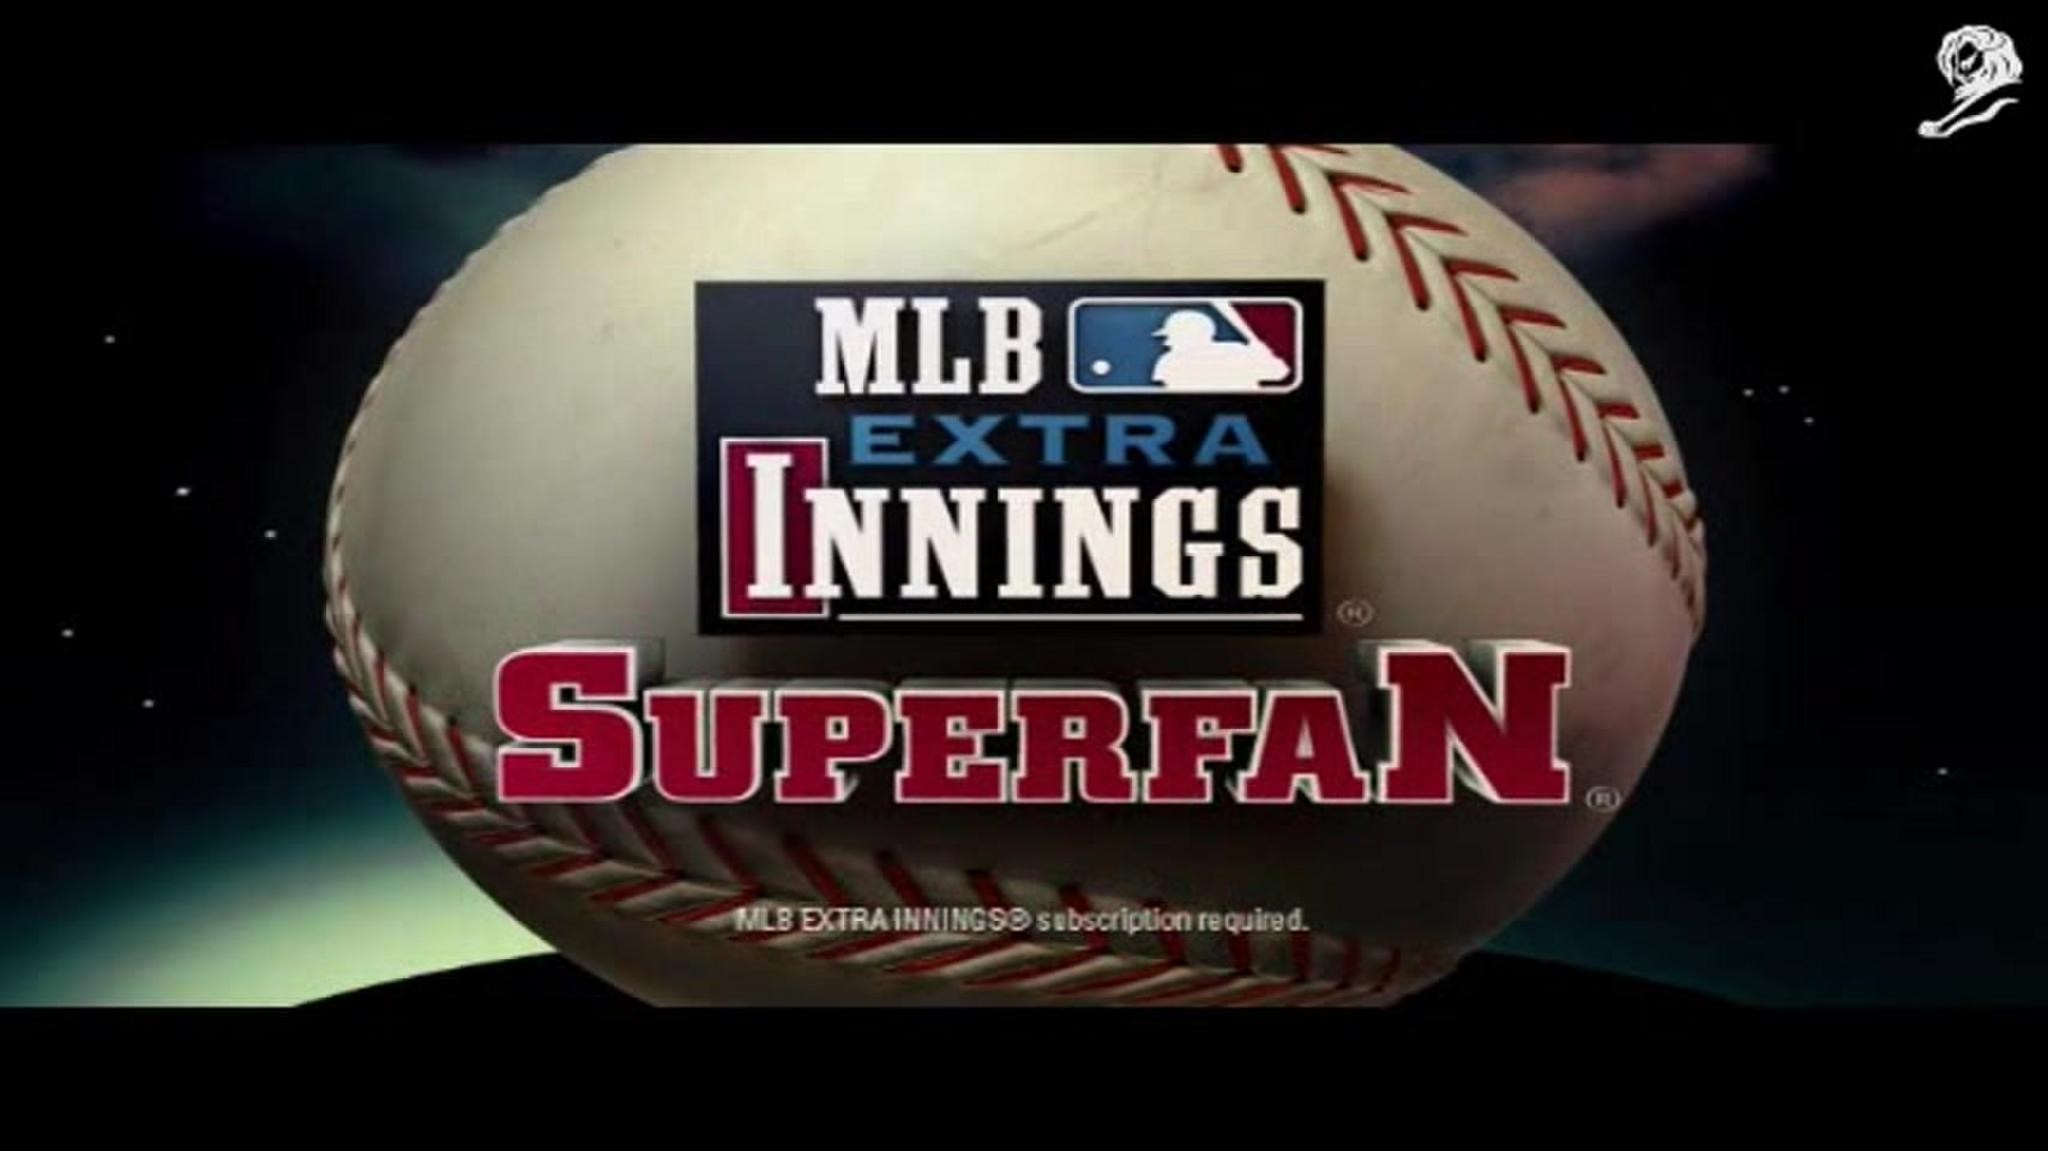 MLB EXTRA INNINGS SUPERFAN DIRECTV SATELLITE